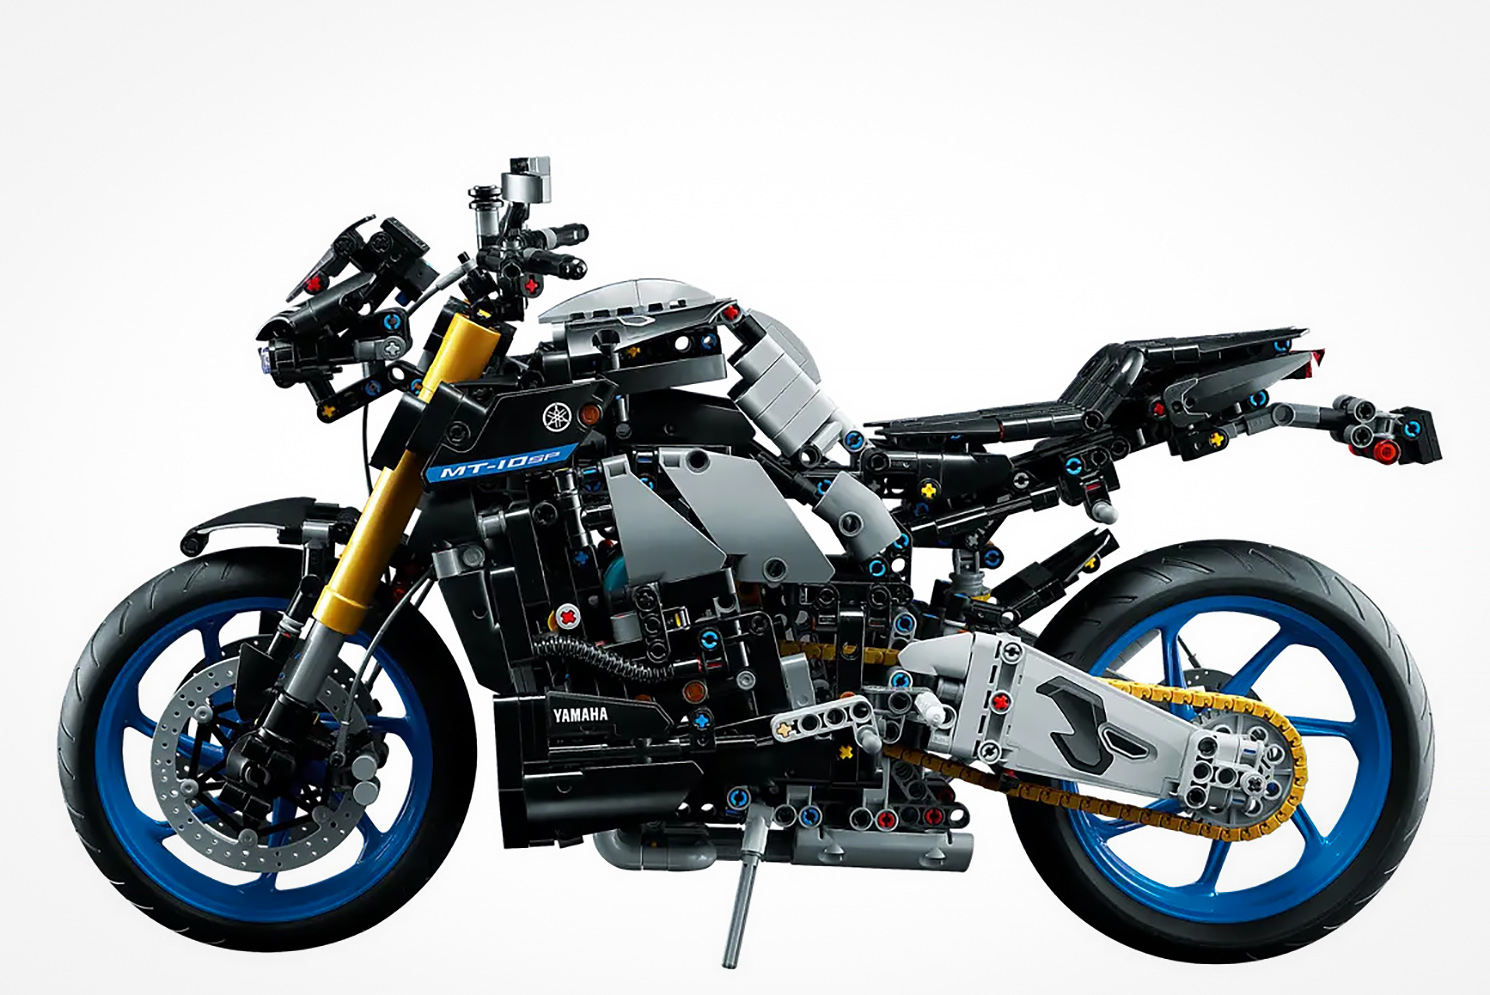 Yamaha MT-10 SP by Lego